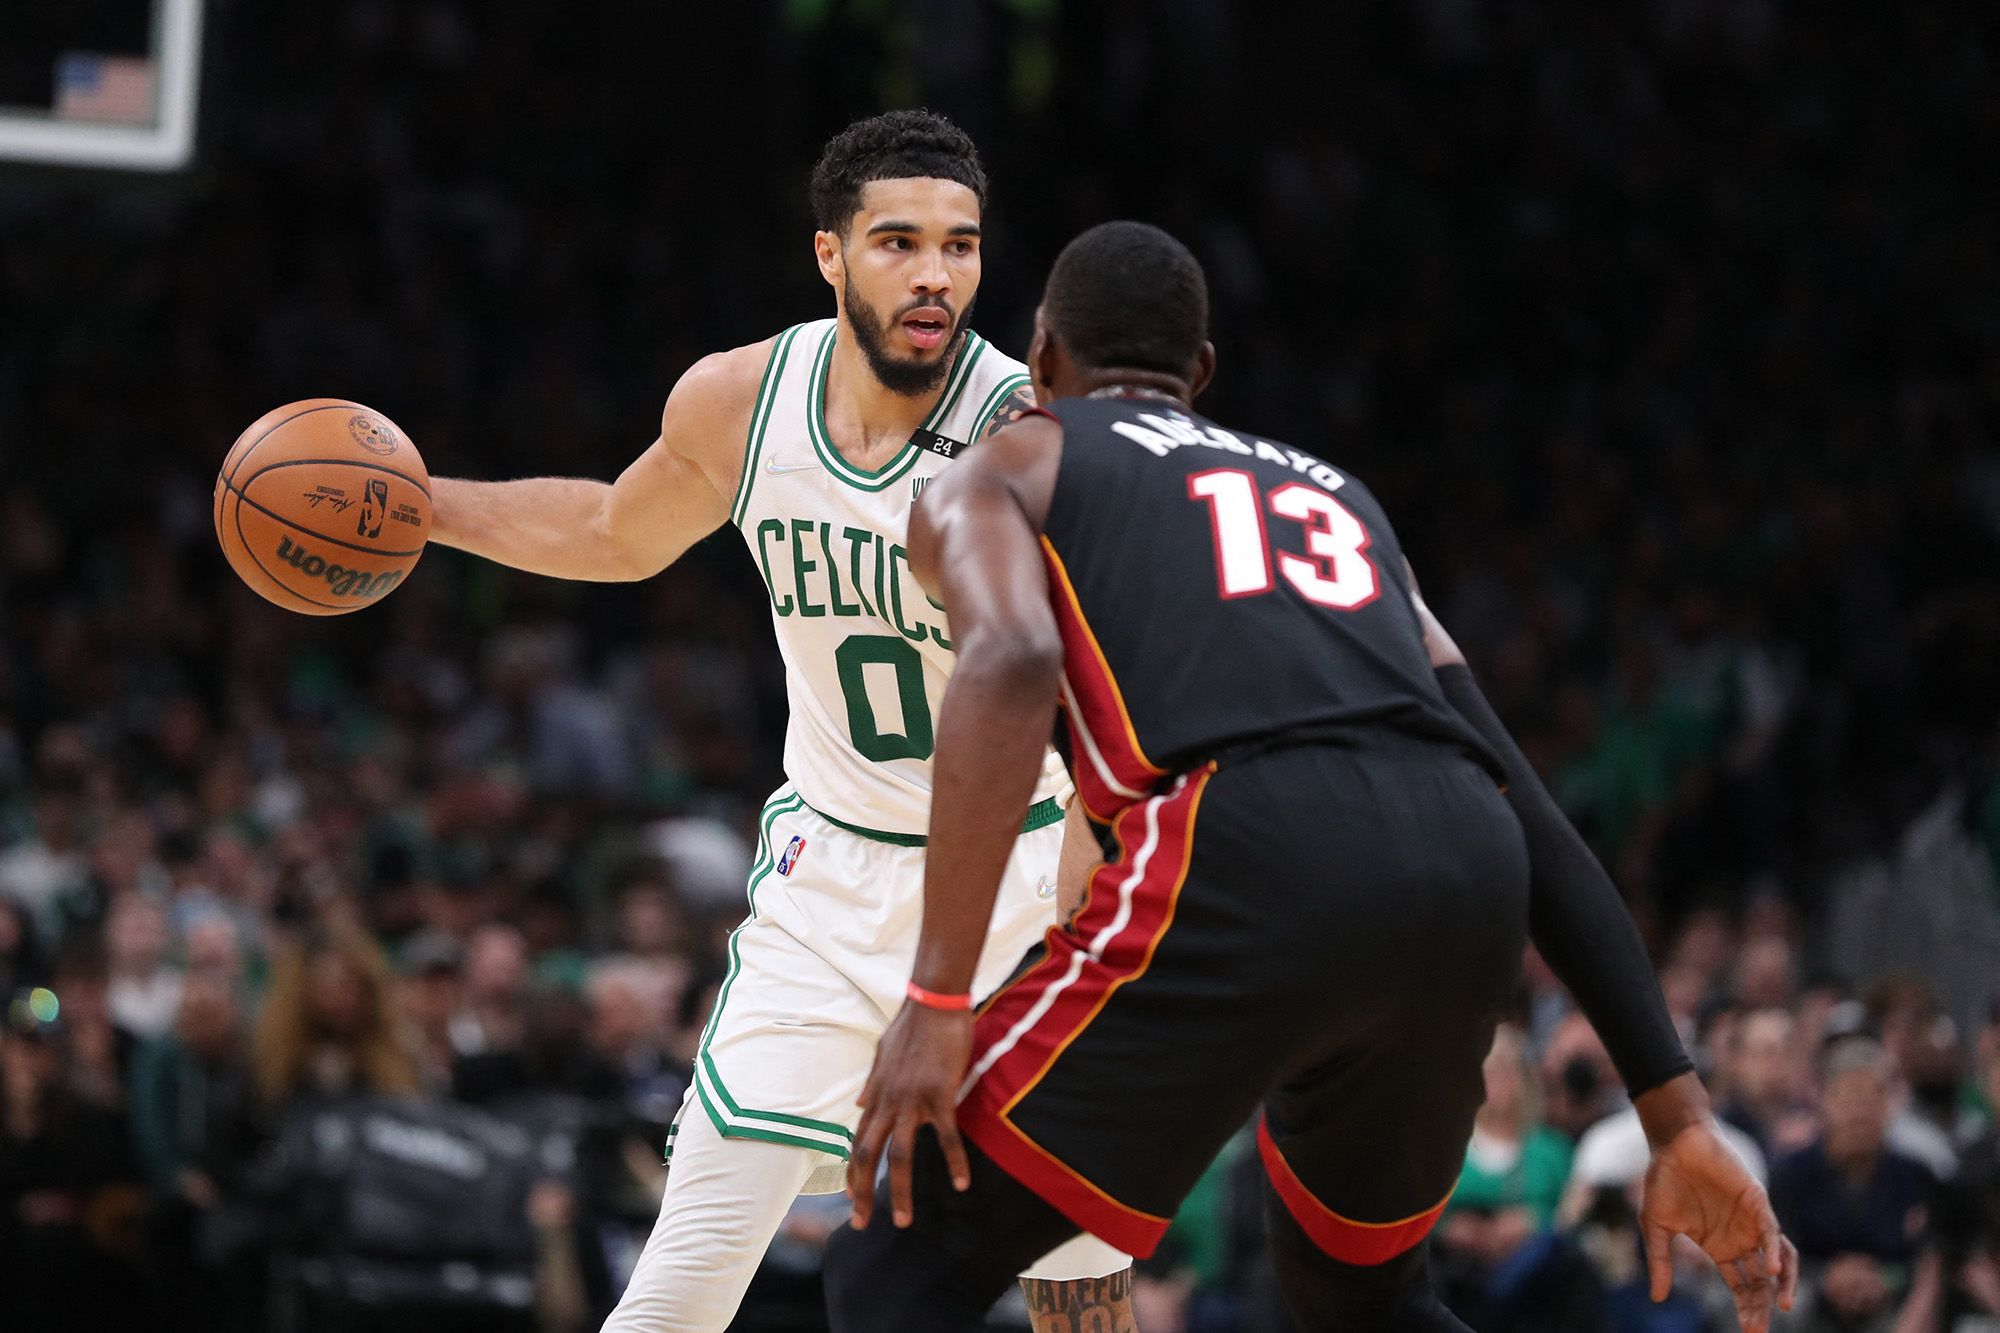 Celtics sobrevivem contra Heat na NBA, e Tatum vai à loucura